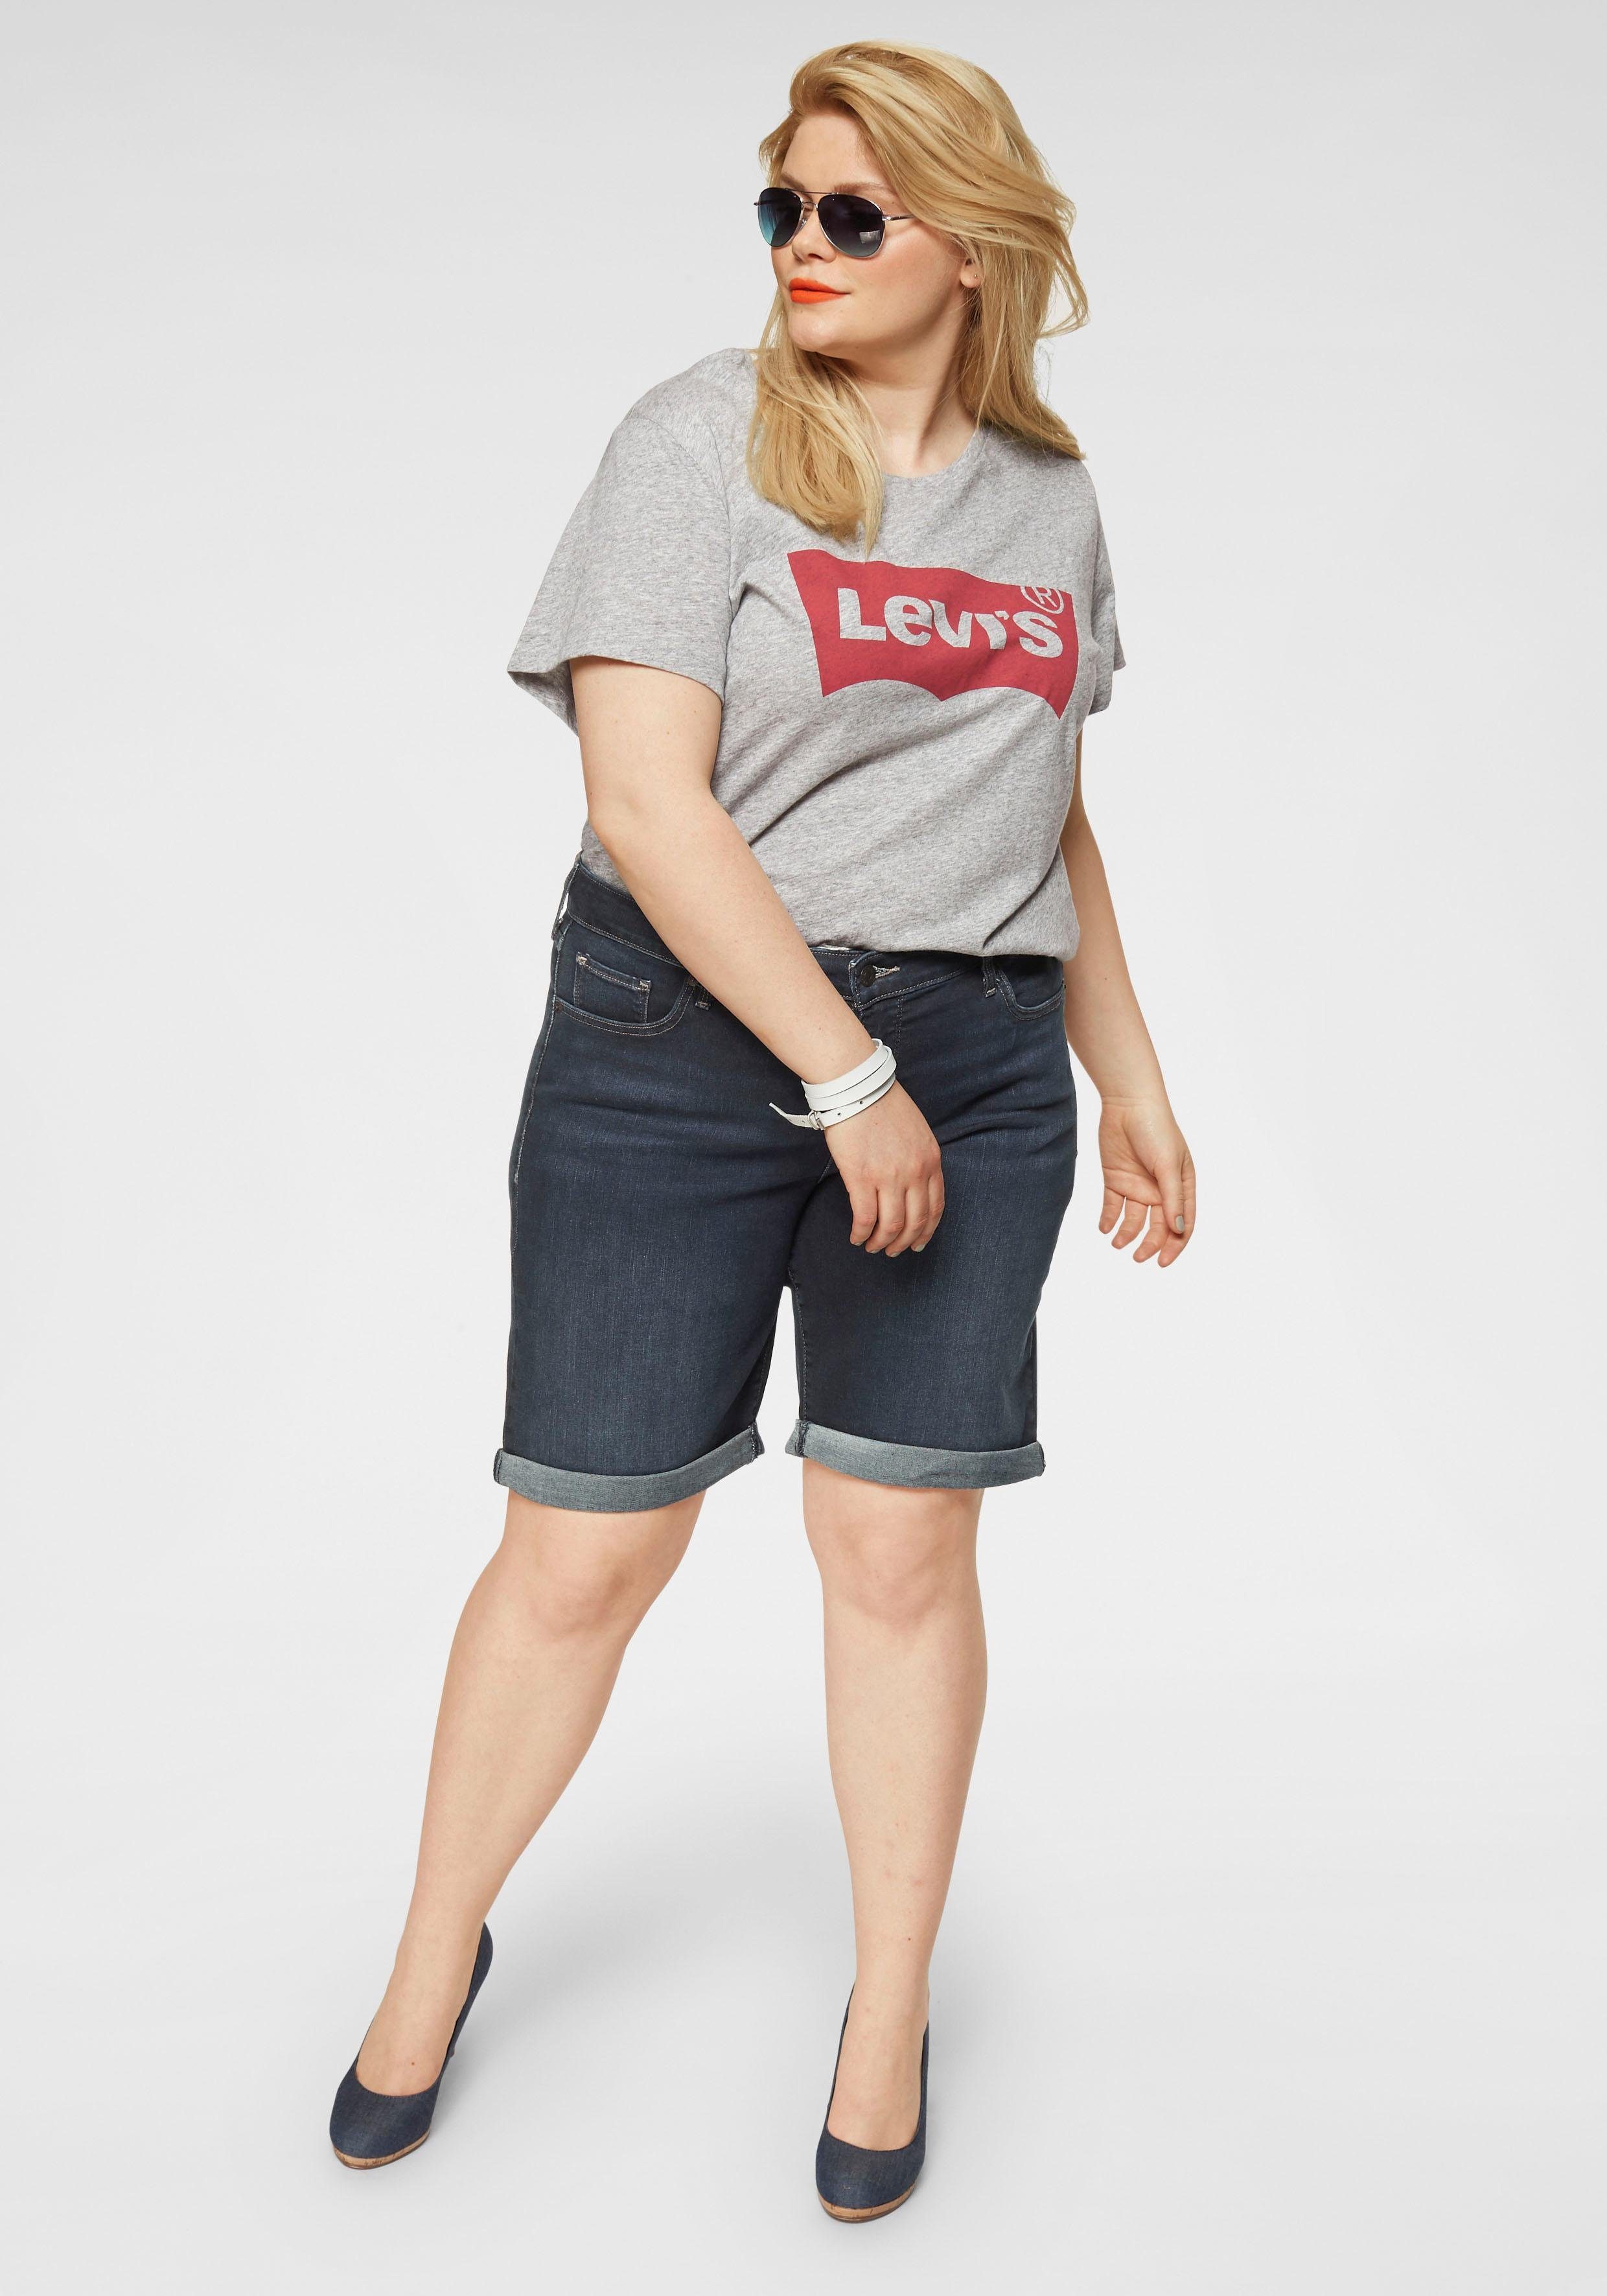 Batwing-Logo Plus grau-meliert-rot Tee T-Shirt mit Perfect Levi's®